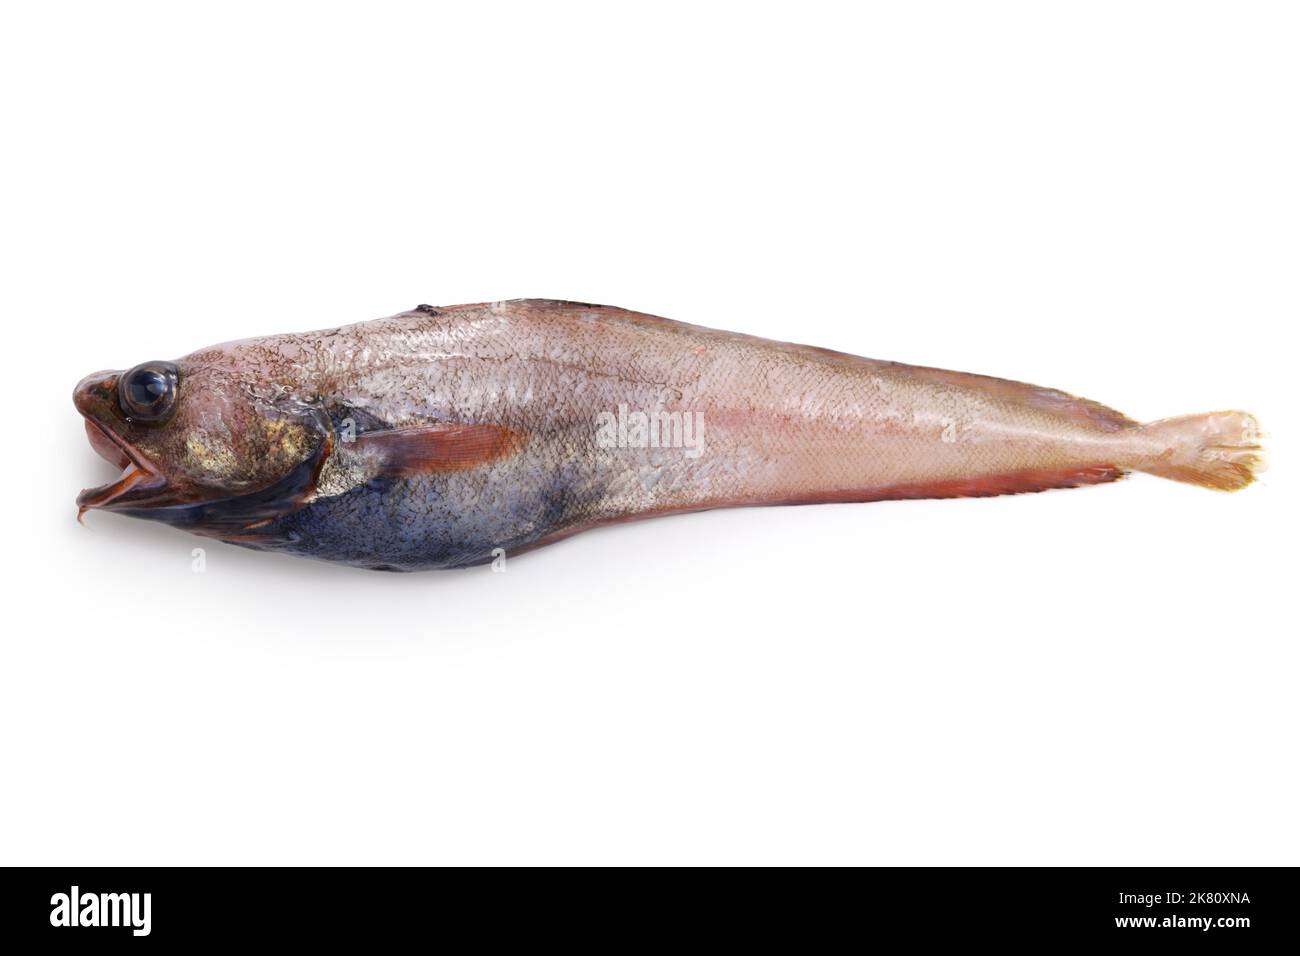 Deliciosos peces de aguas profundas que aún no son famosos (Physiculus inbarbatus) aislados sobre fondo blanco Foto de stock